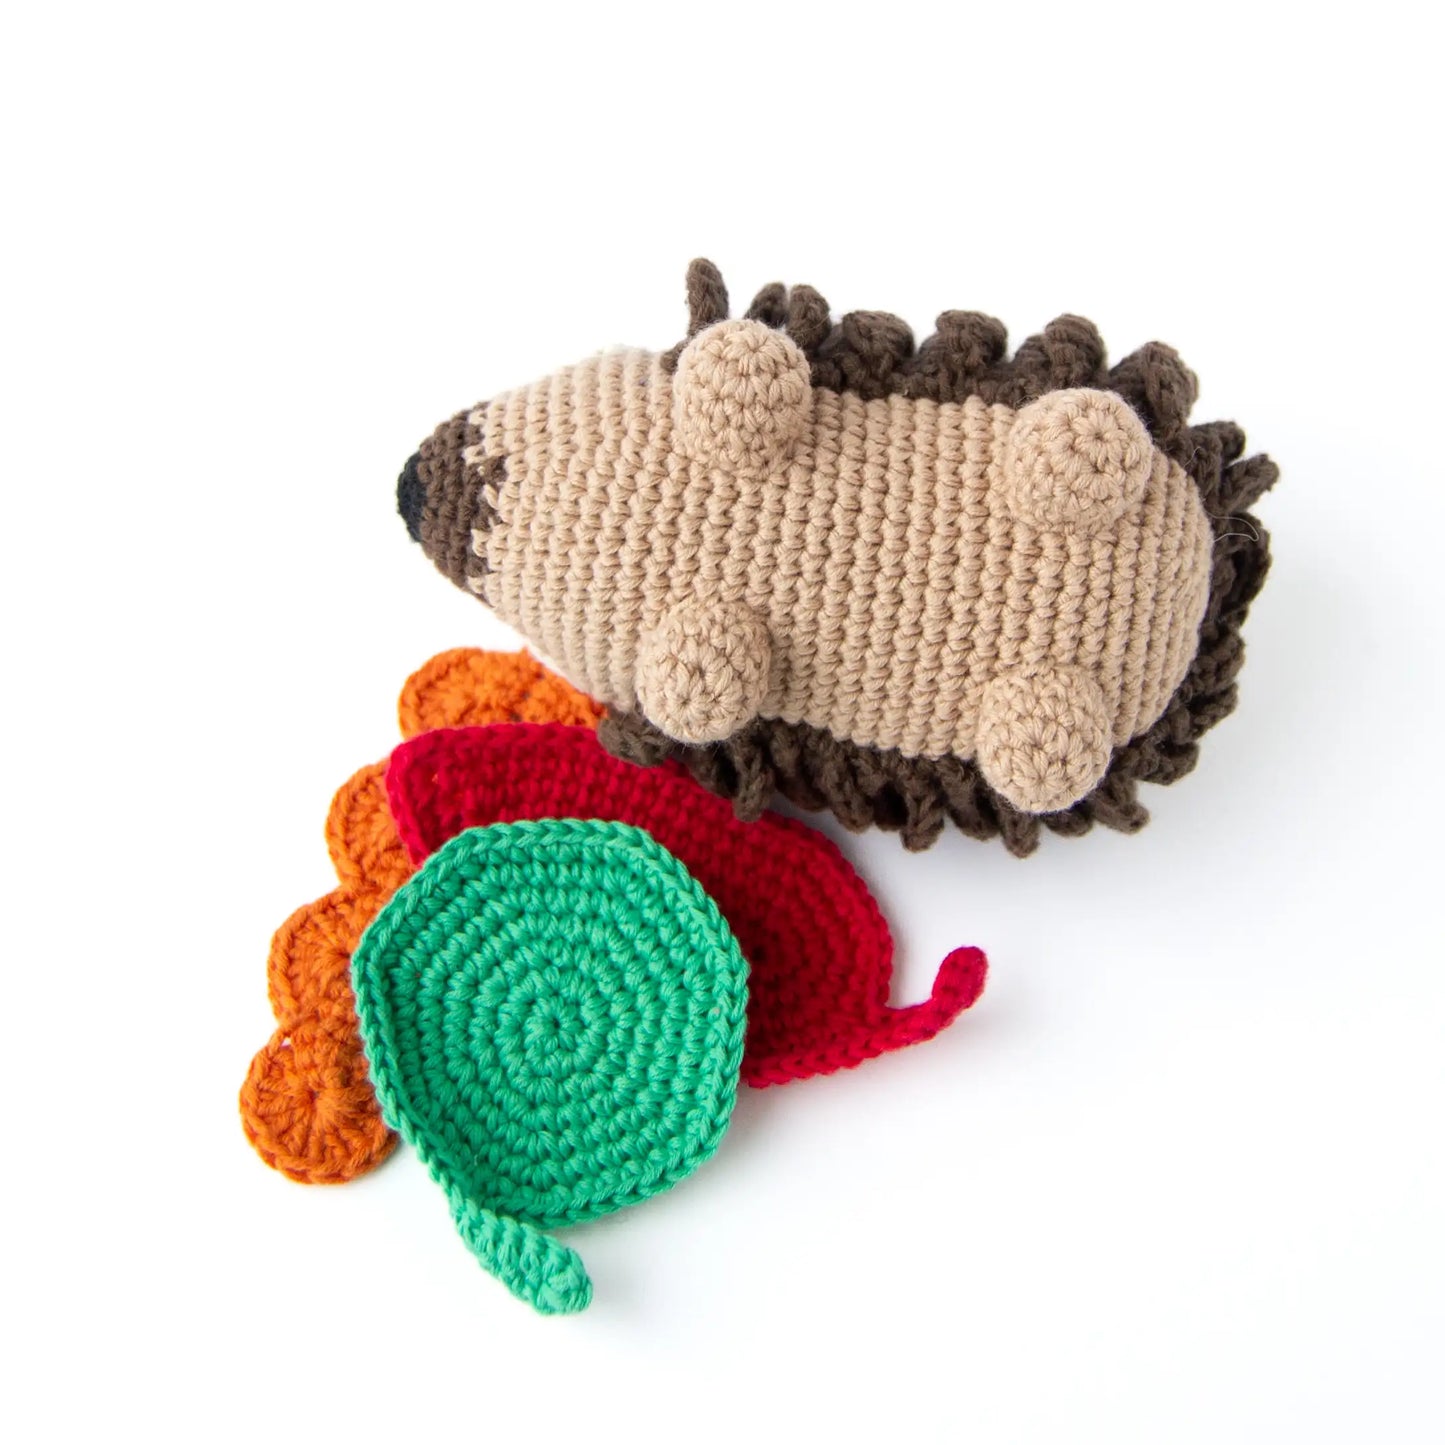 Henry the hedgehog | crochet amigurumi PDF pattern